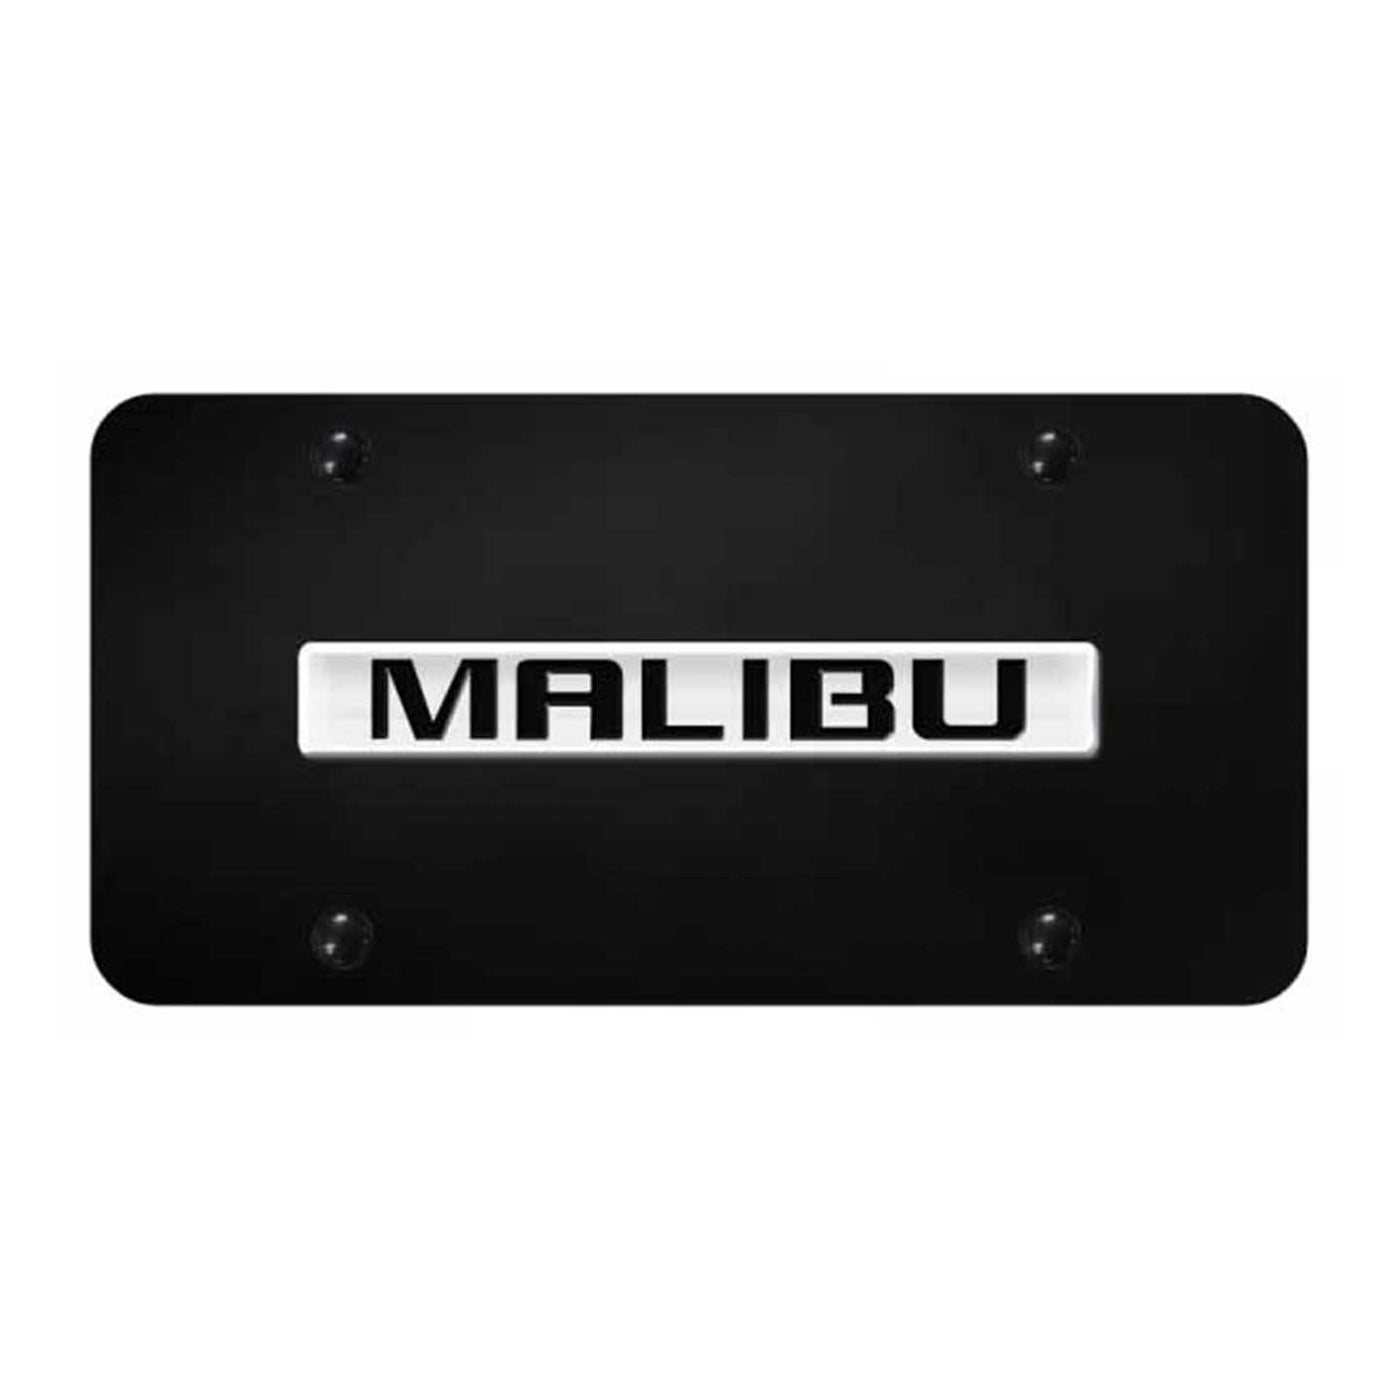 Malibu Name License Plate - Chrome on Black